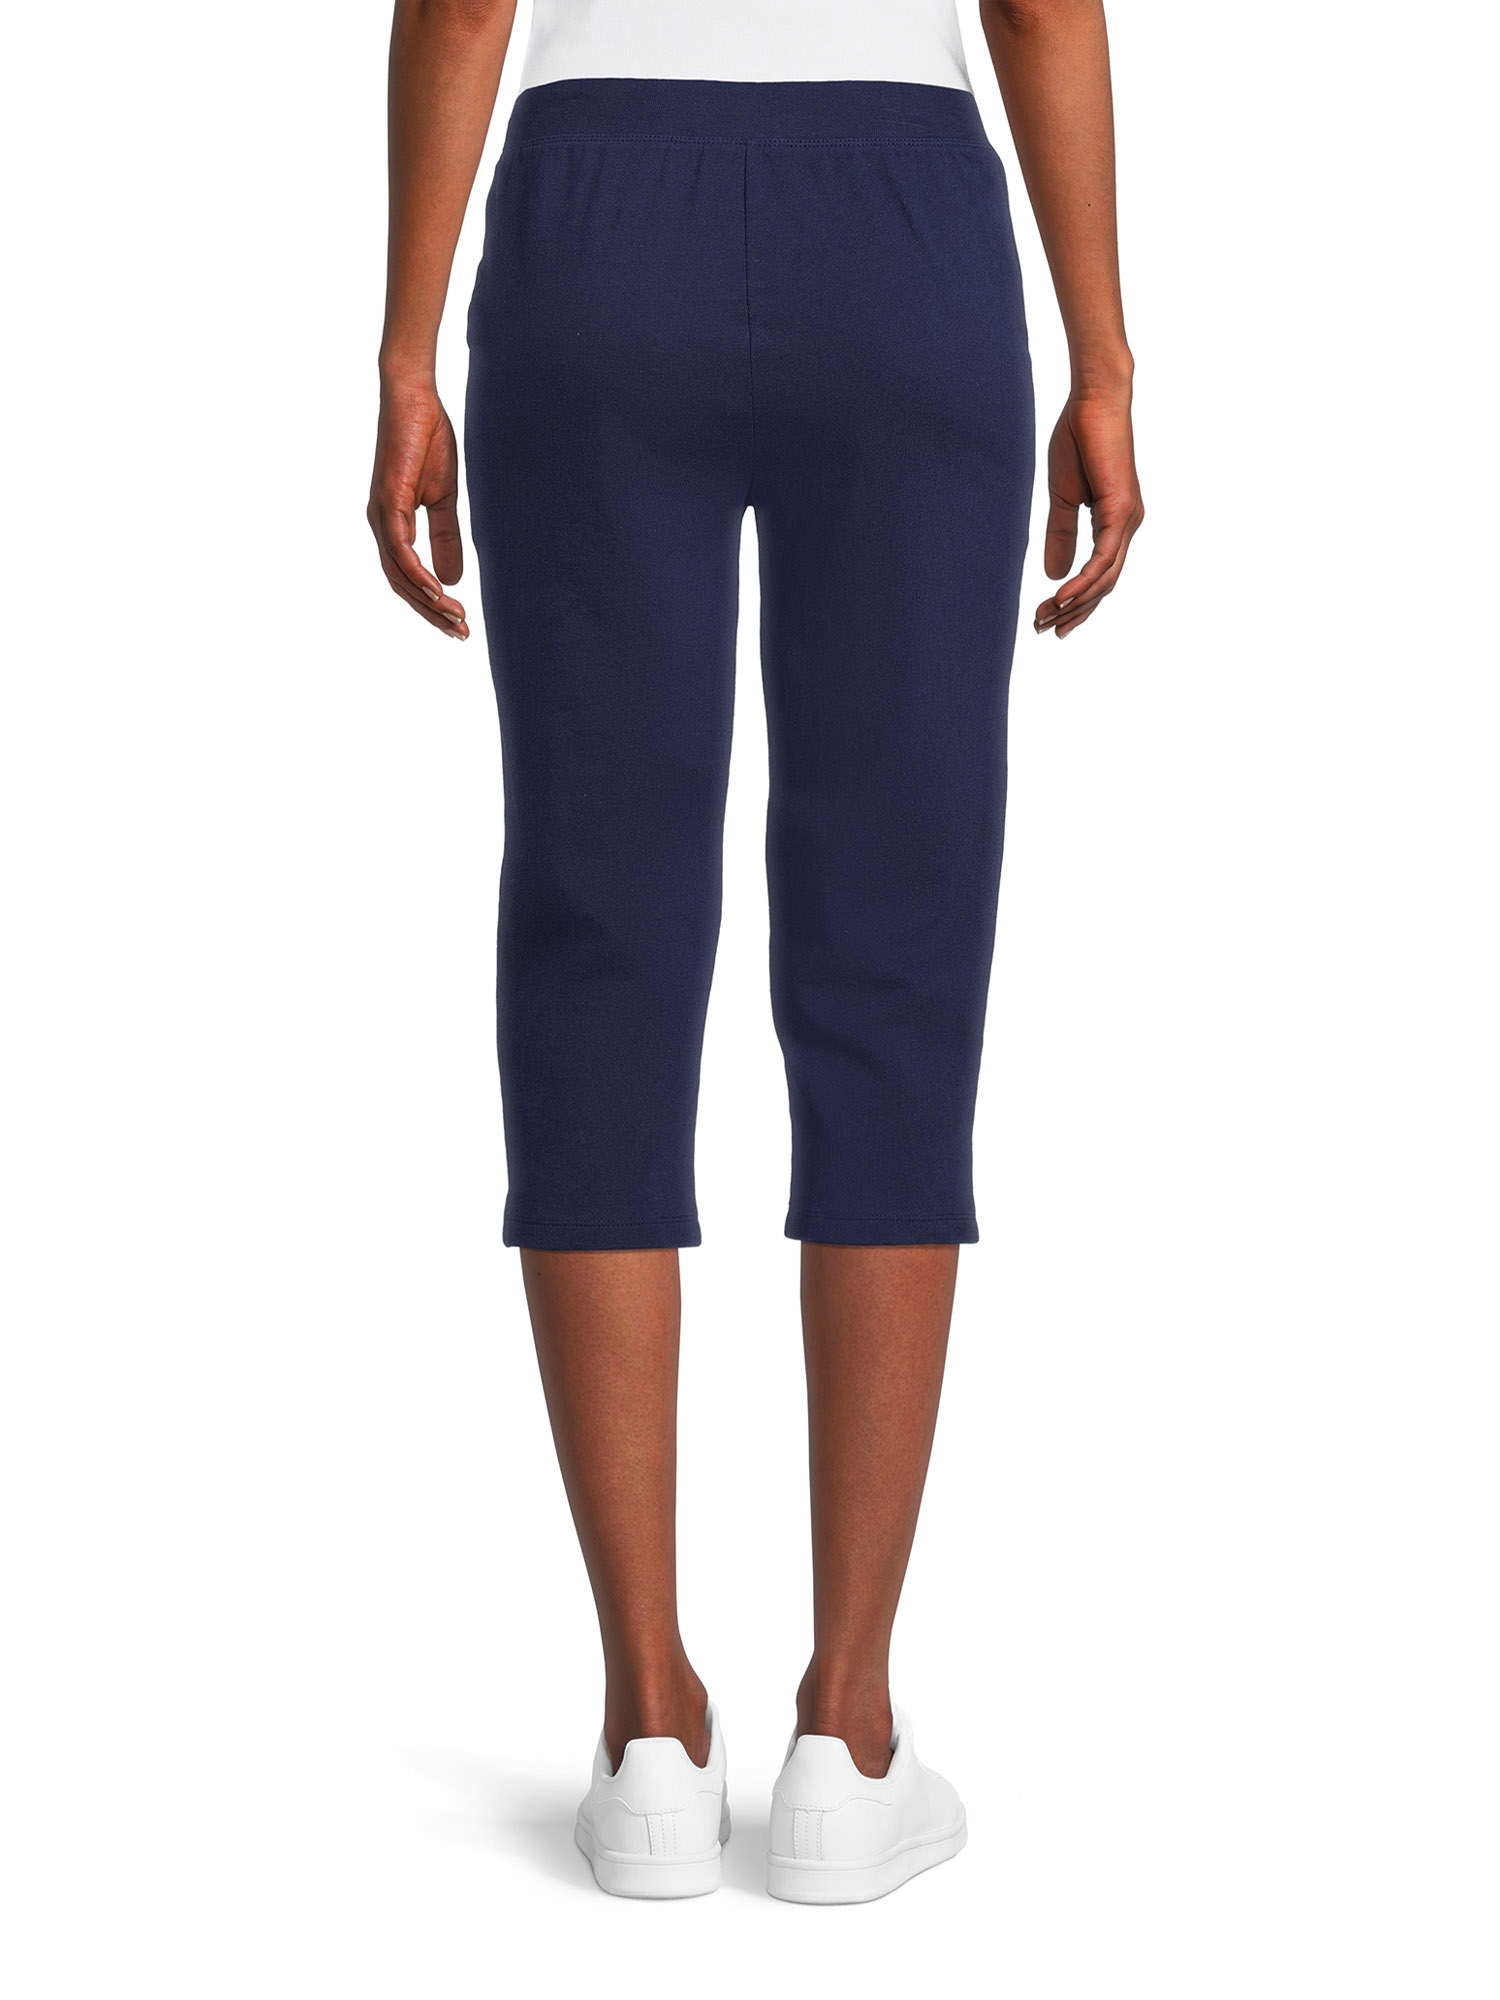 RealSize Women's French Terry Cloth Capri Pants with Pockets, XS-XXXL ...